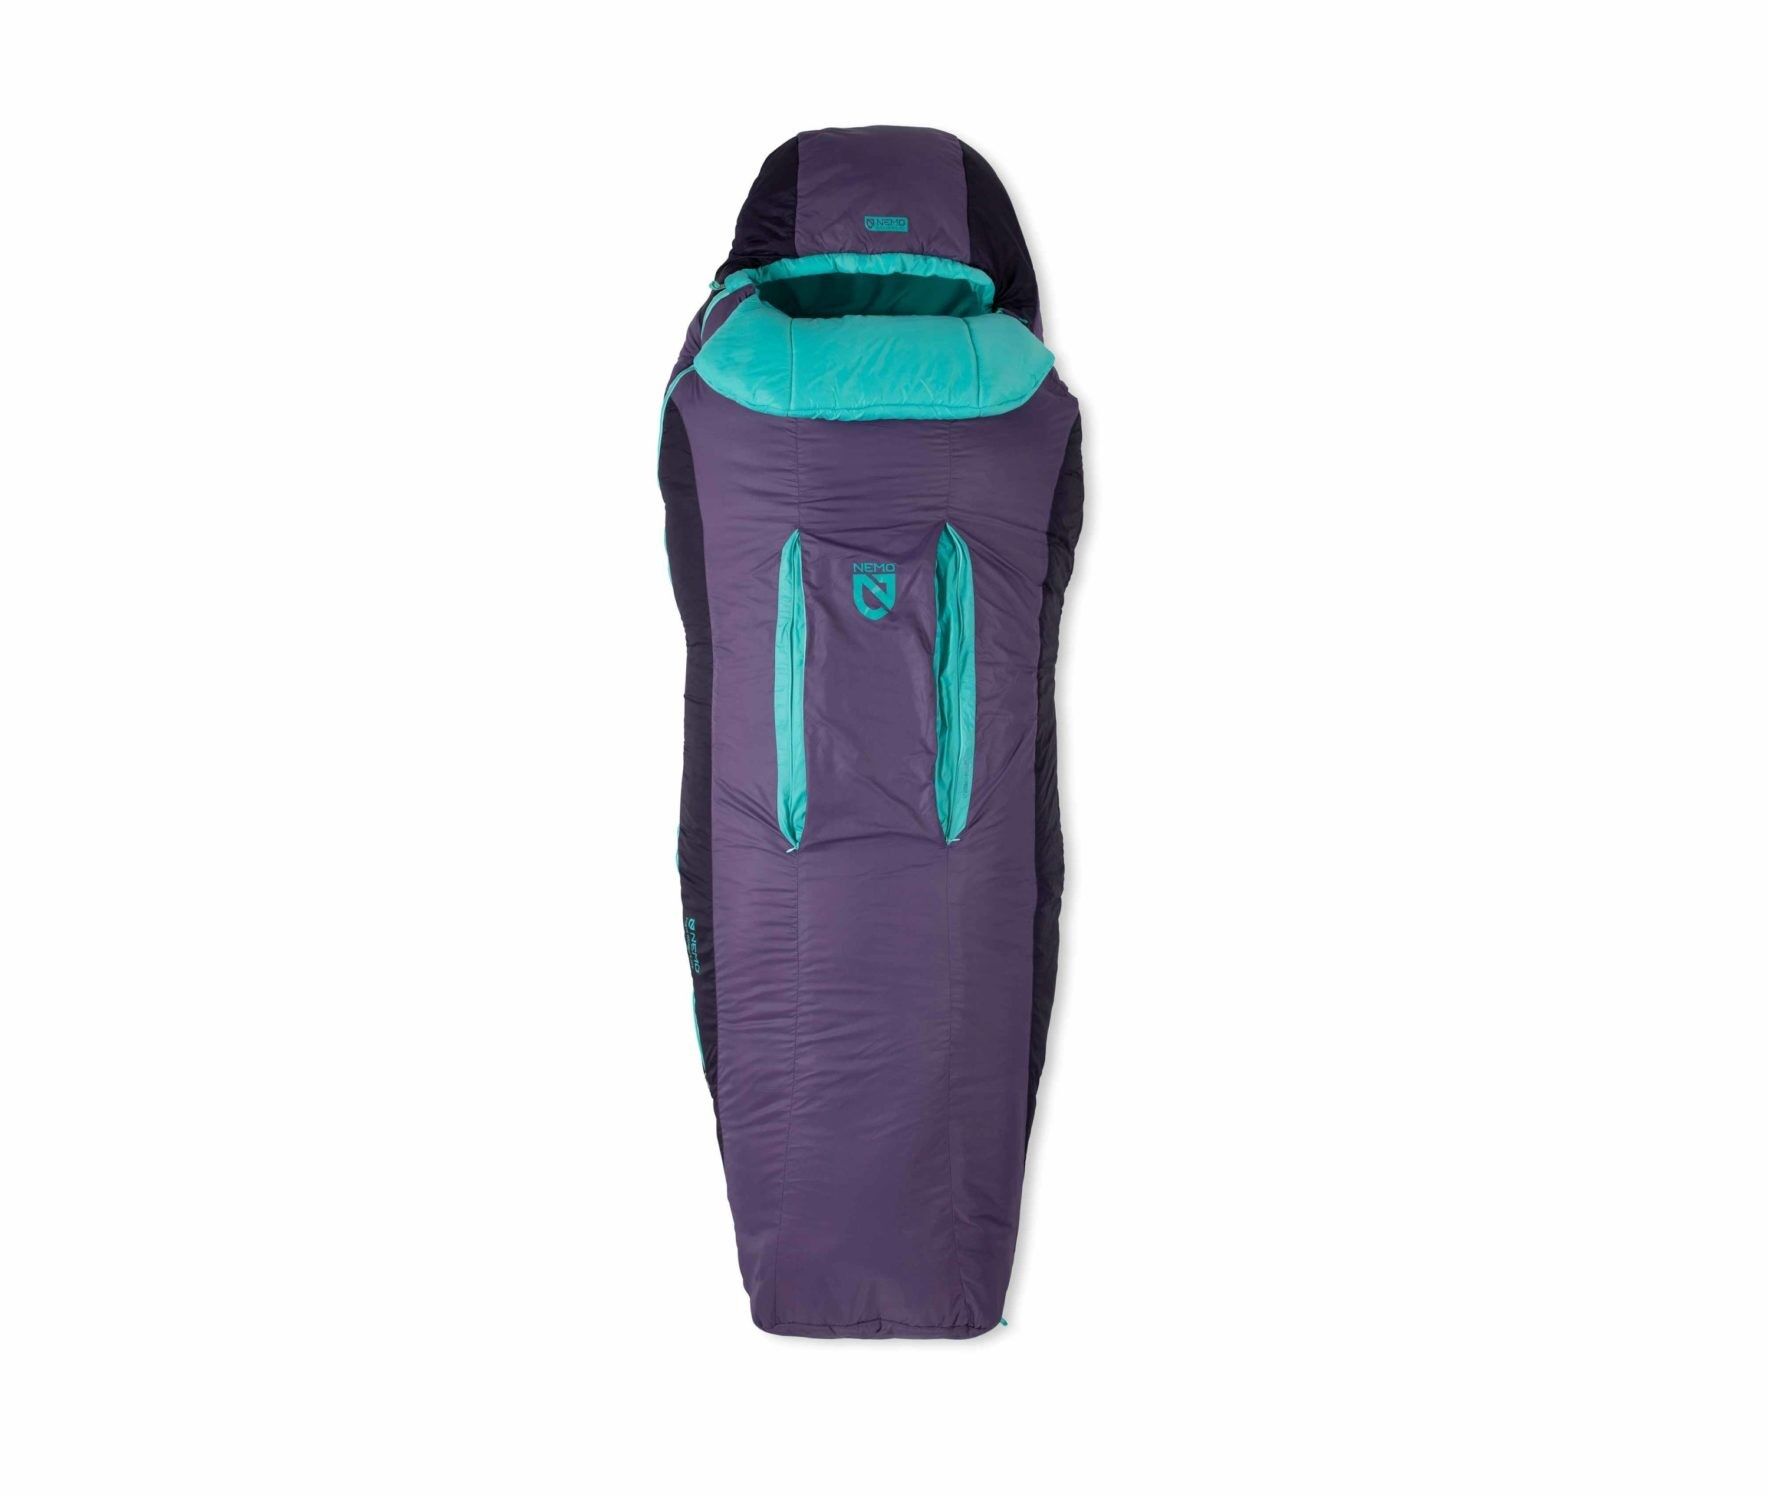 Nemo Forte 20 - Sleeping bag - Women's